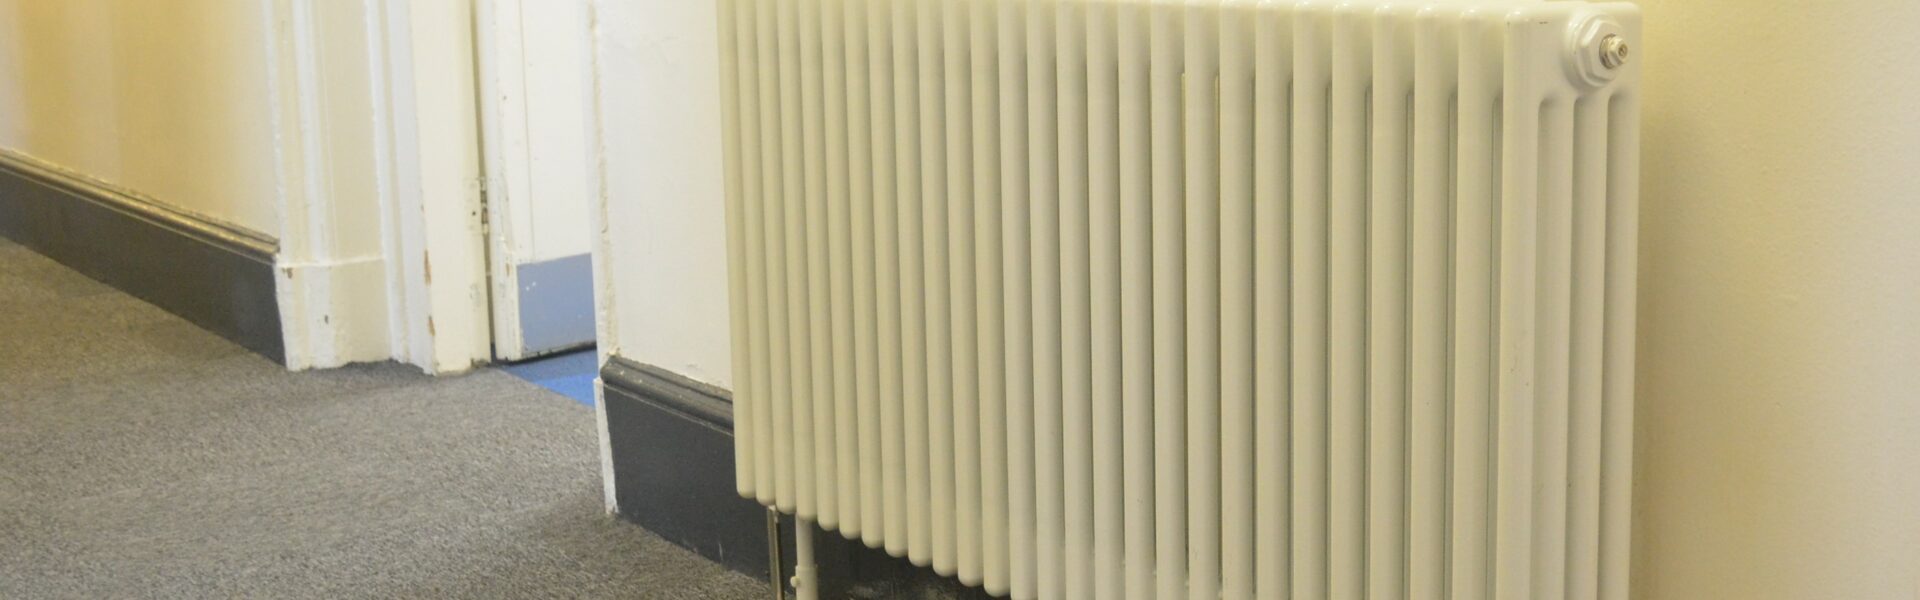 Column radiators for Blue Coat School in Oldham